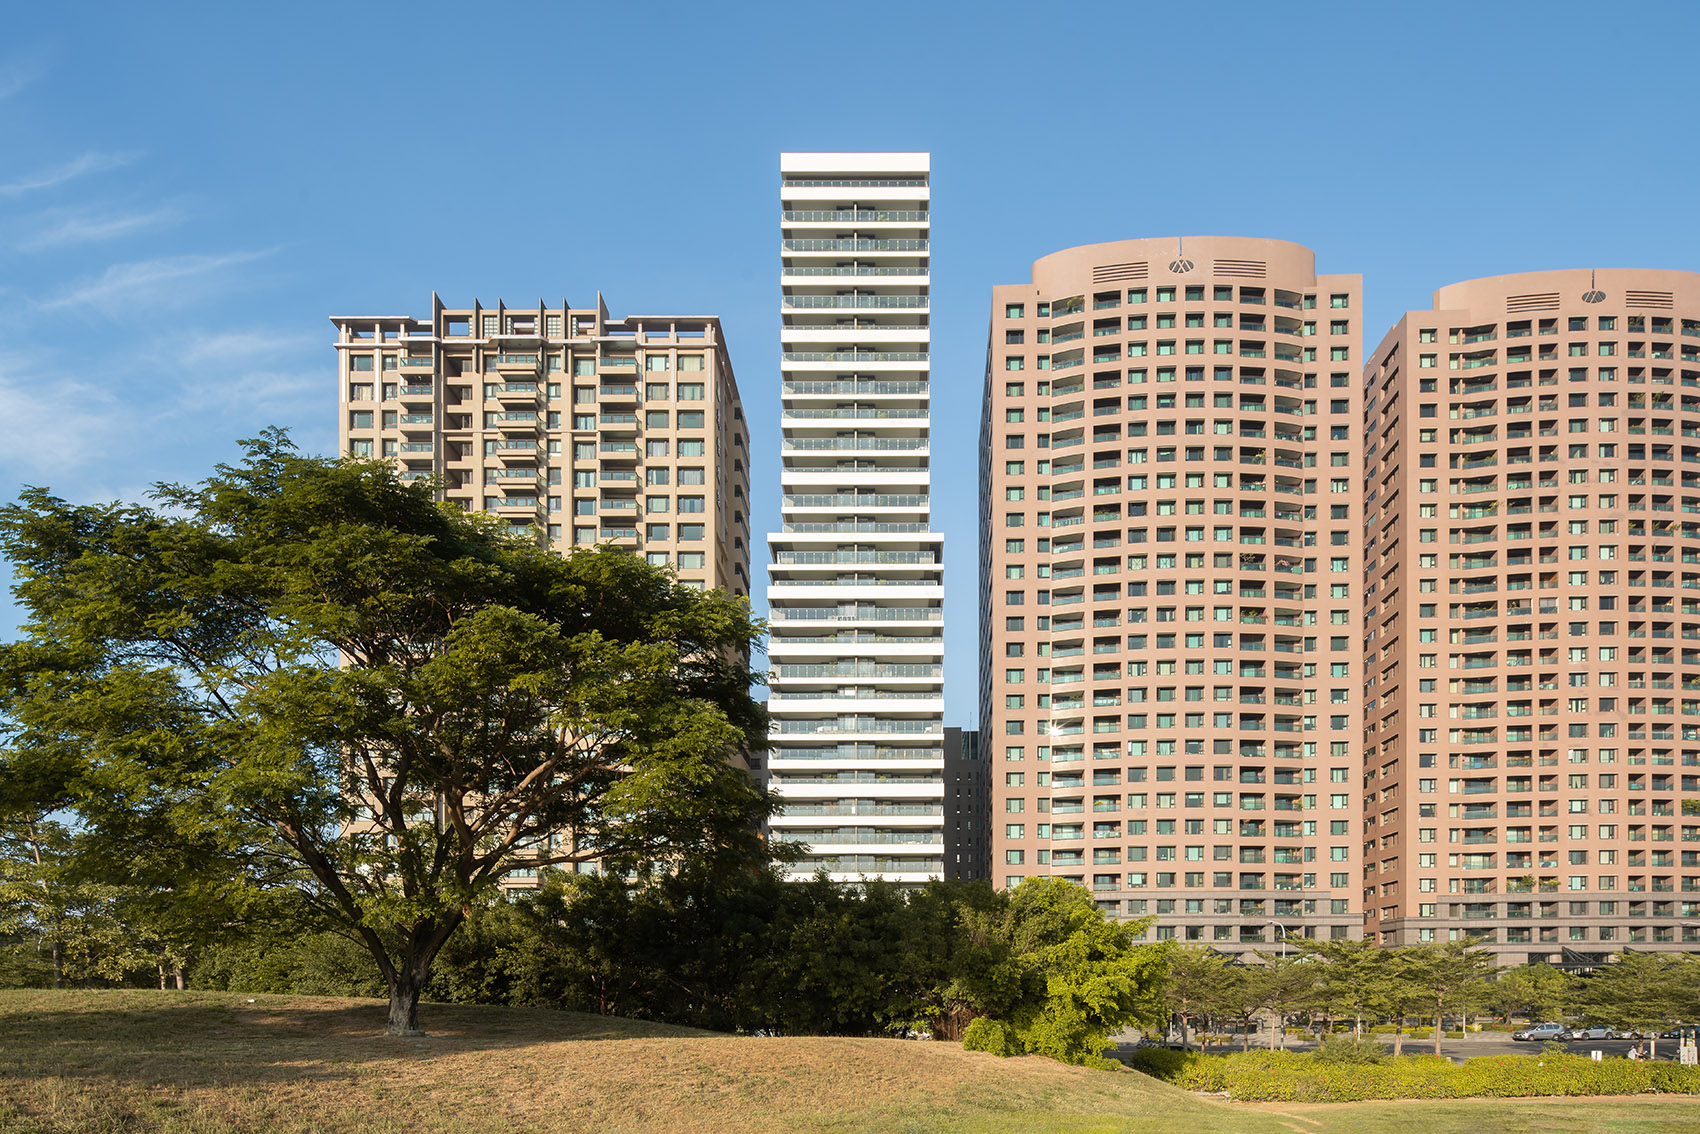 One More住宅楼，台湾/城市环境中的自然生活-45